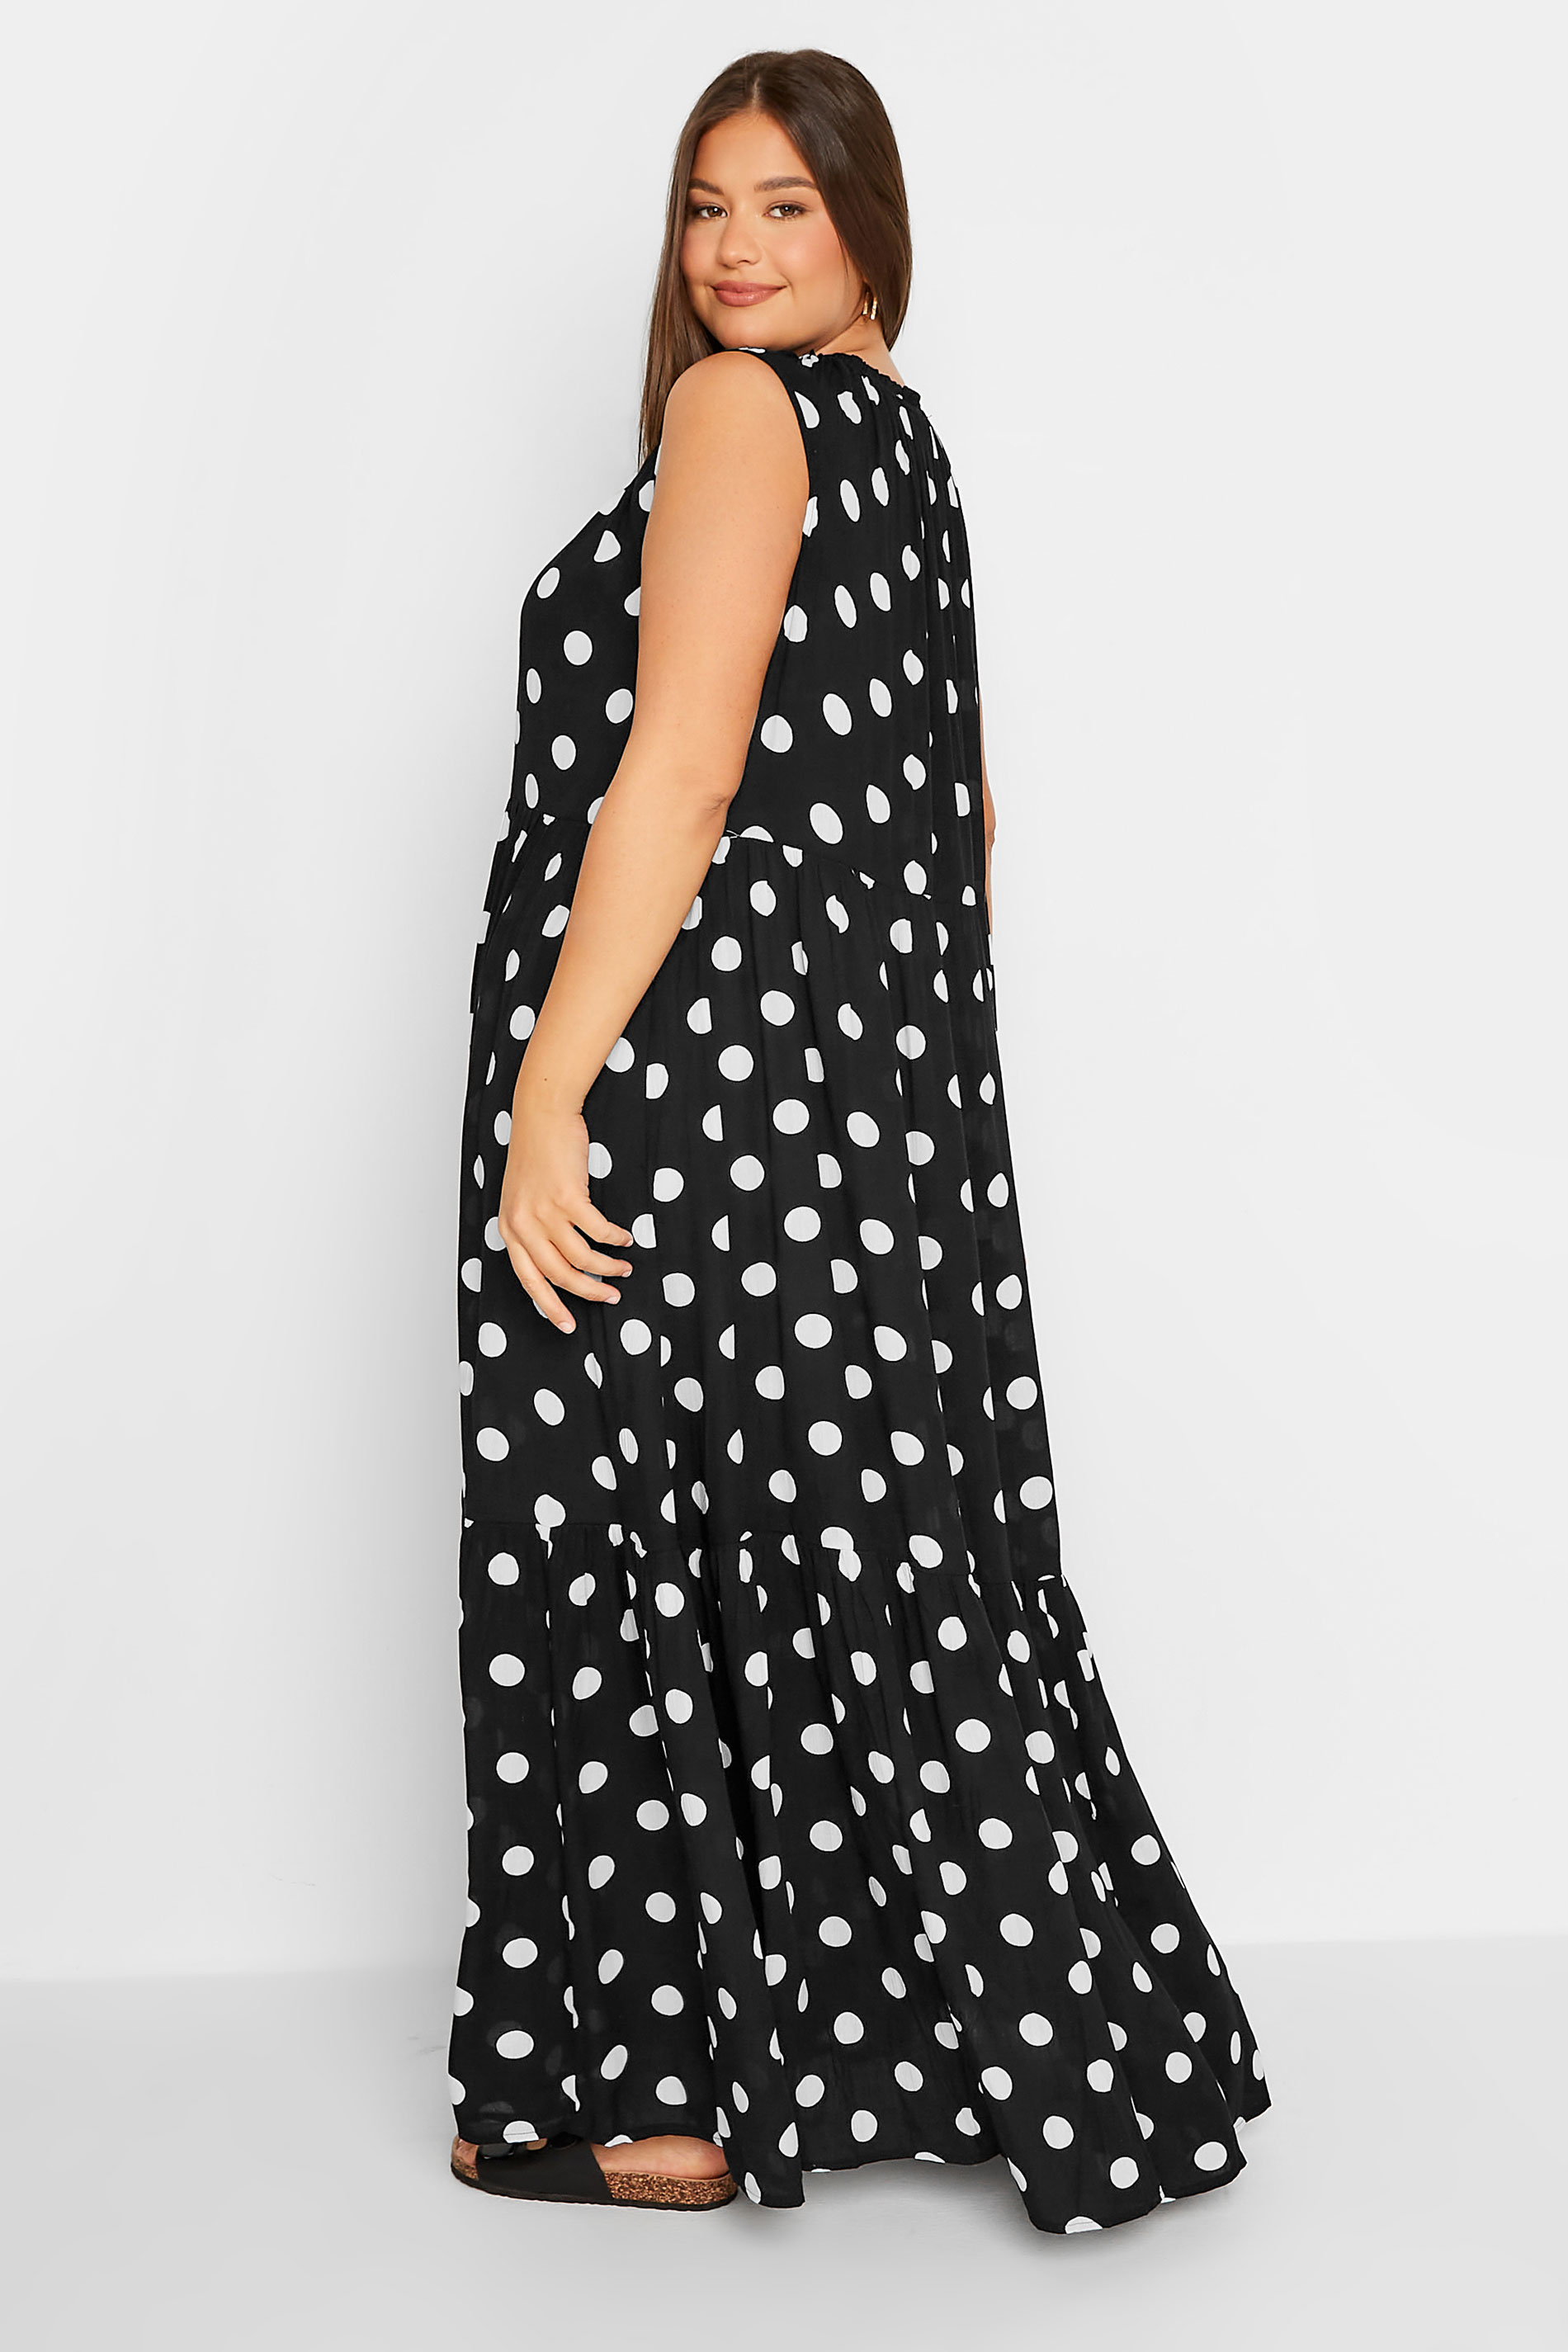 LTS Tall Women's Black Polka Dot Maxi Dress | Long Tall Sally 3